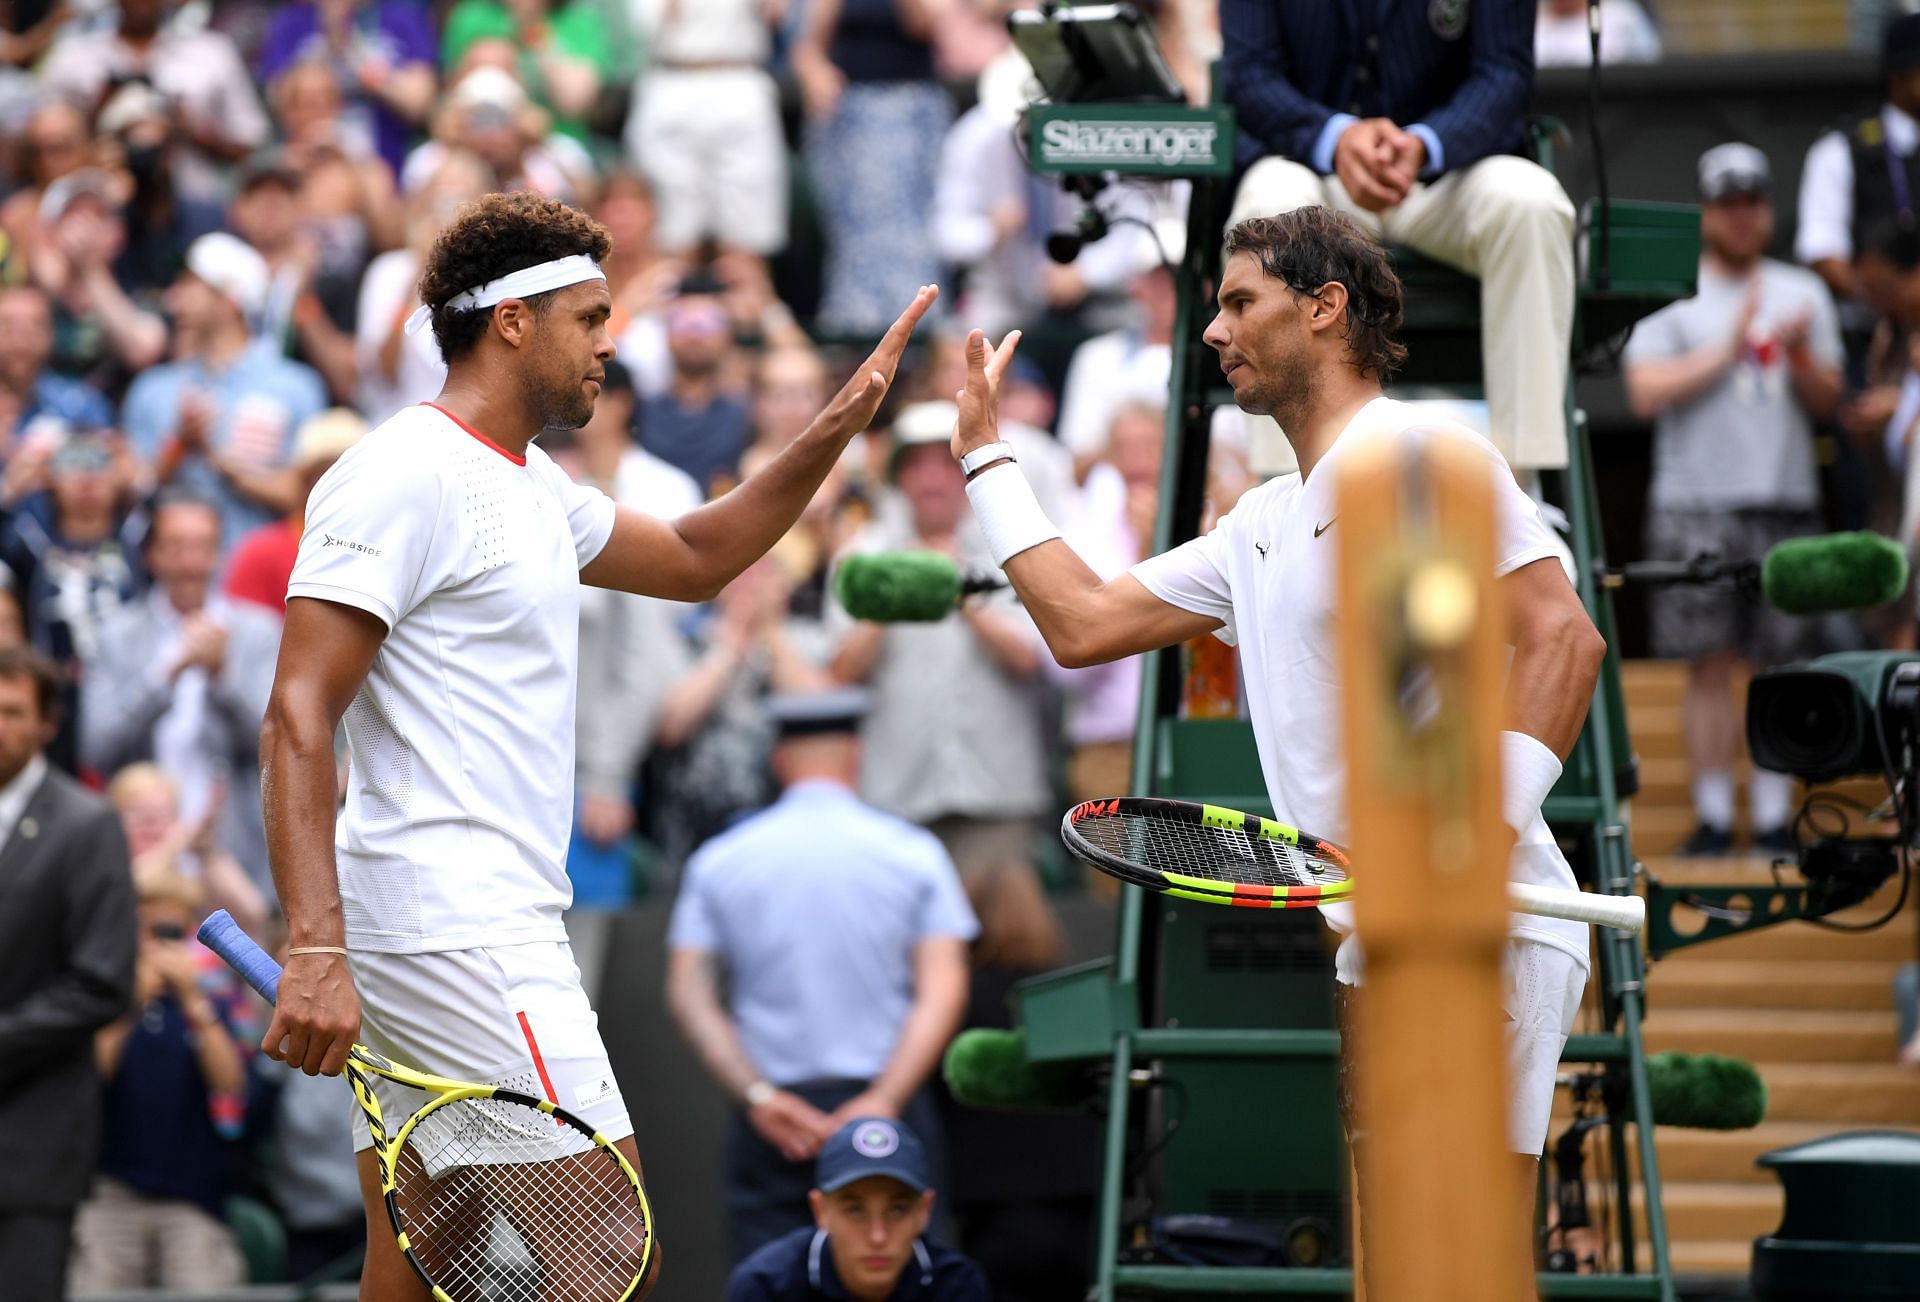 Rafael Nadal leads the head-to-head against Jo-Wilfried Tsonga 10-4